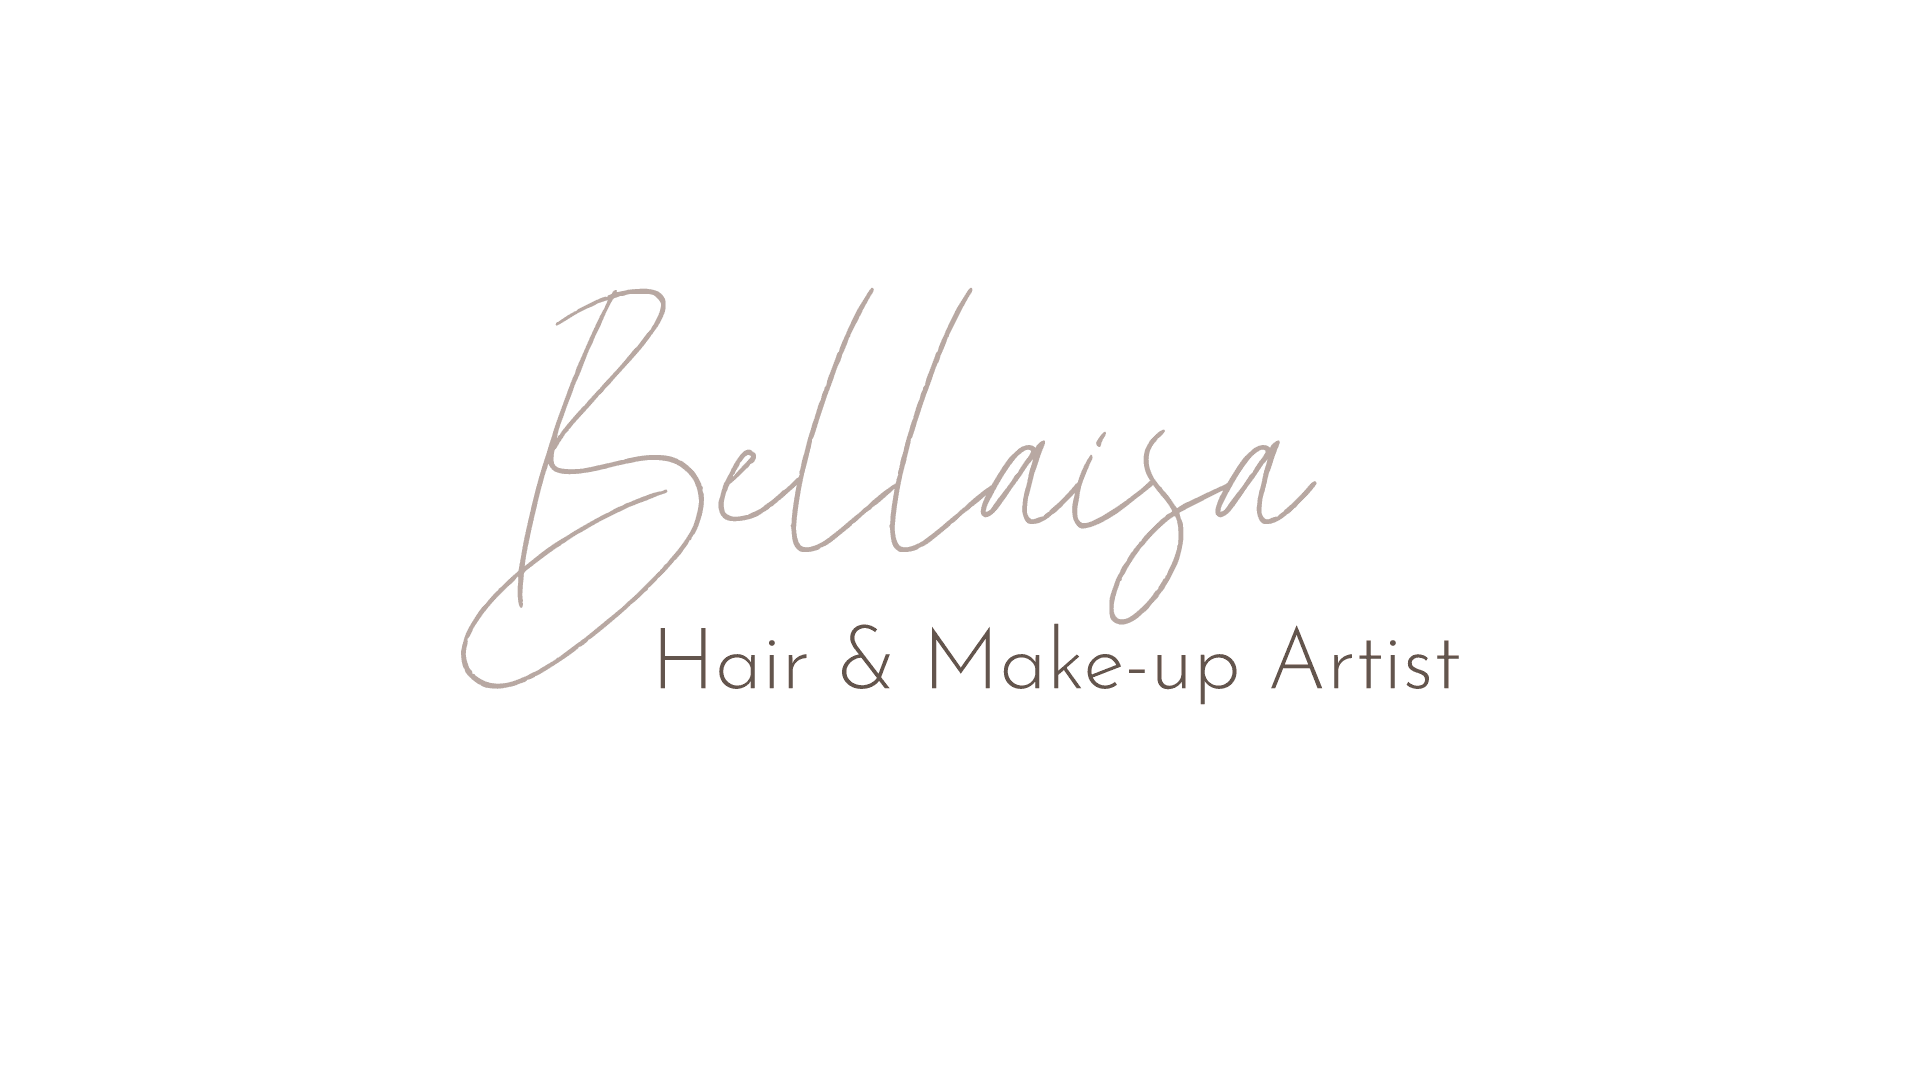 Logogestaltung Bellaisa Referenz